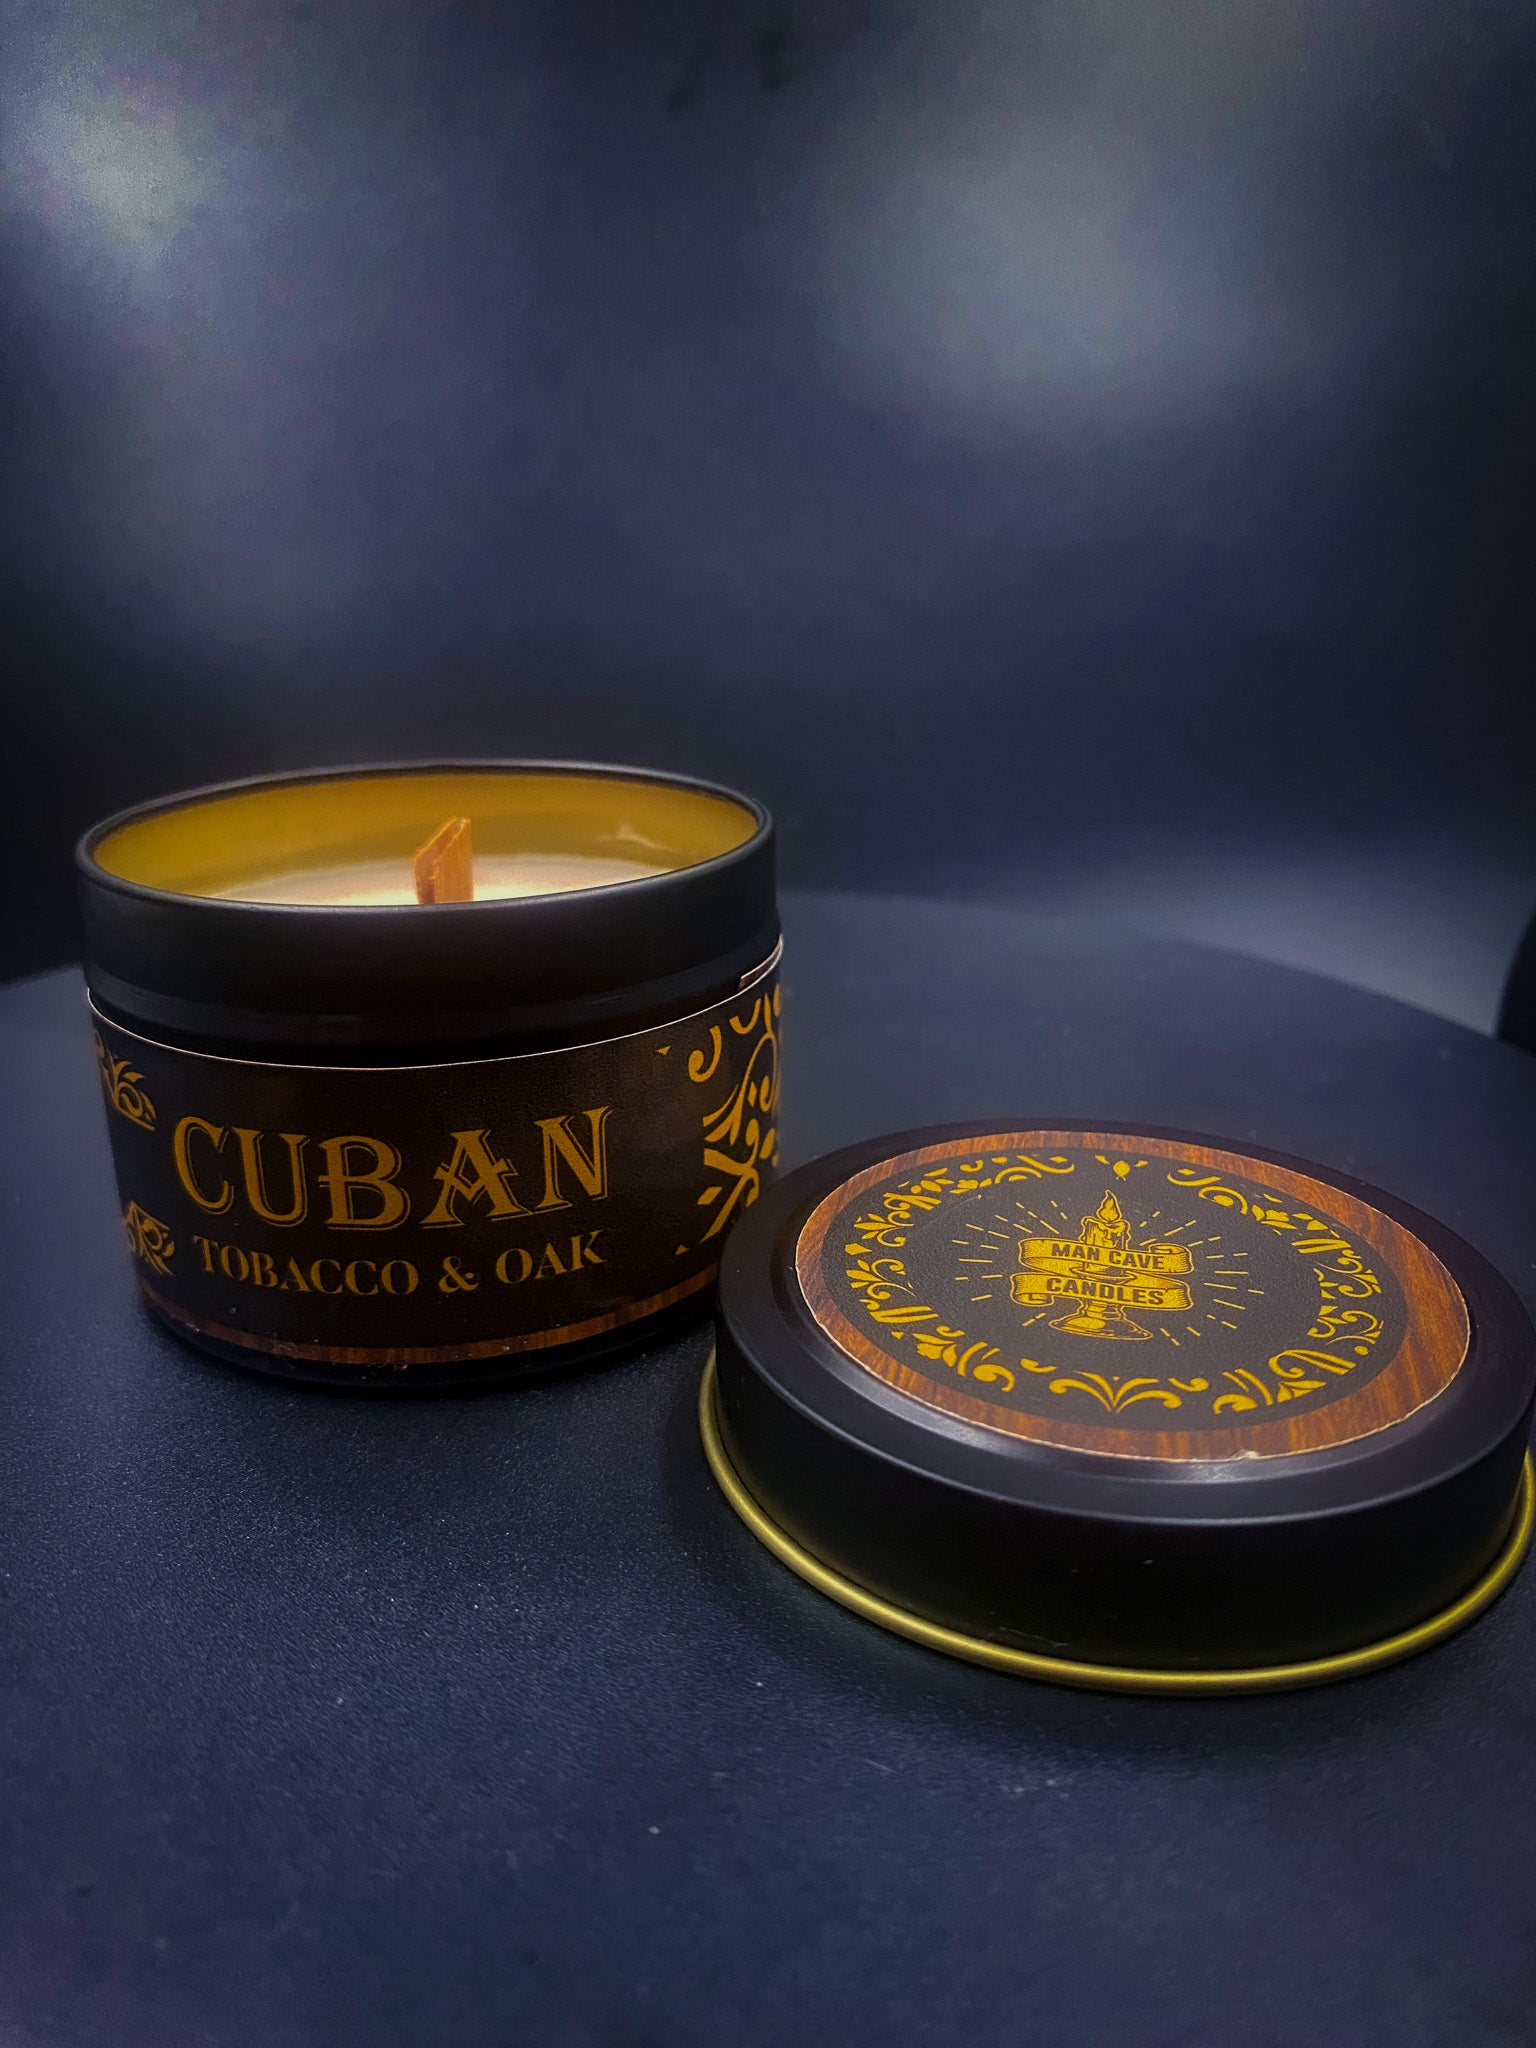 Cuban - Tobacco & Oak Scented Man Cave Candle